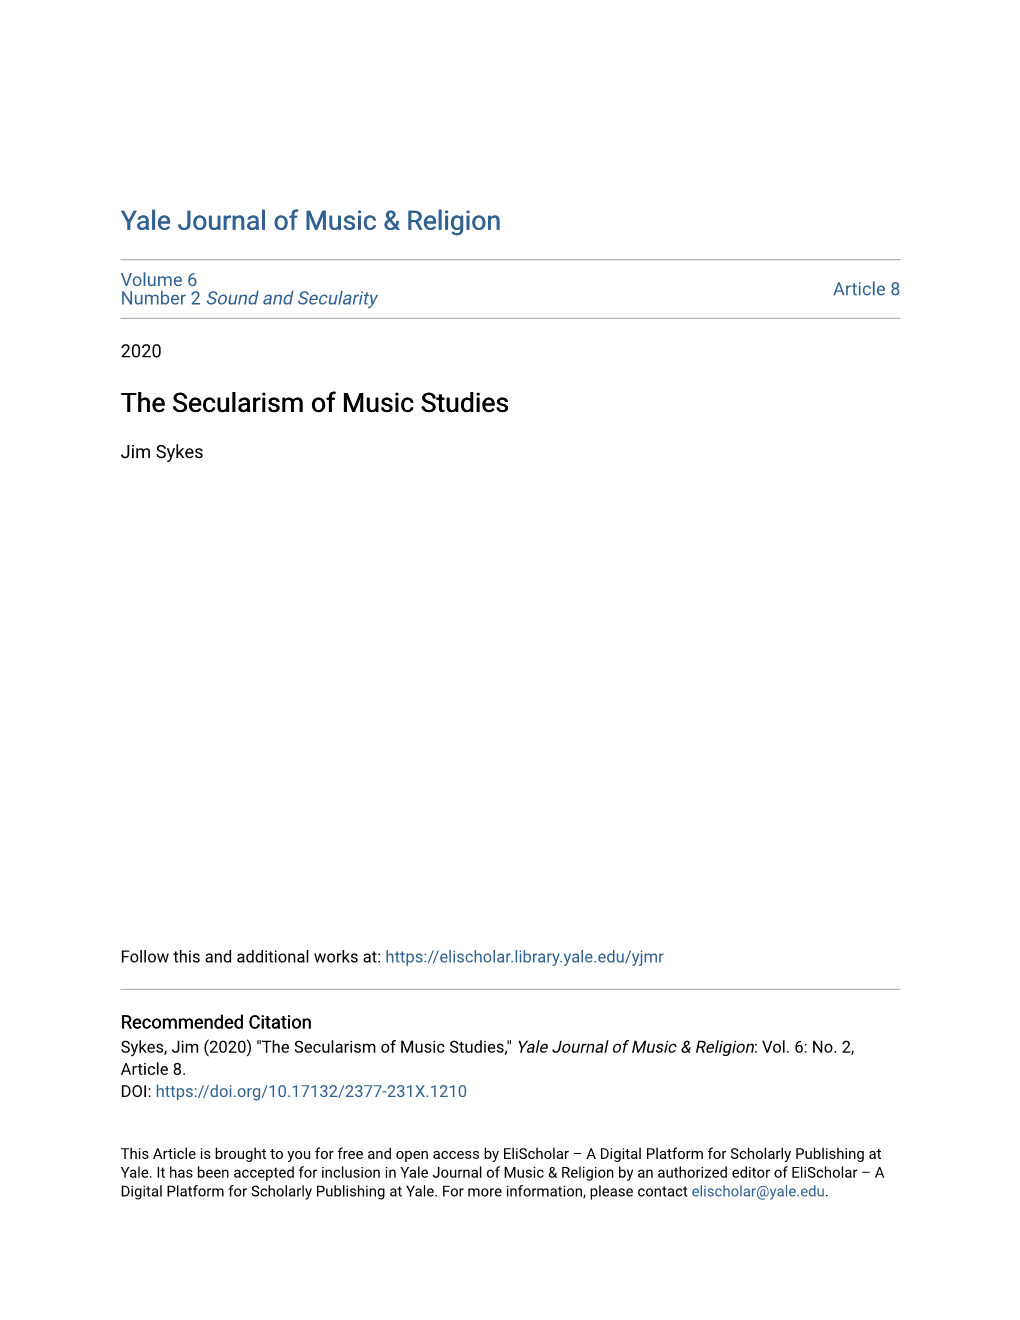 The Secularism of Music Studies